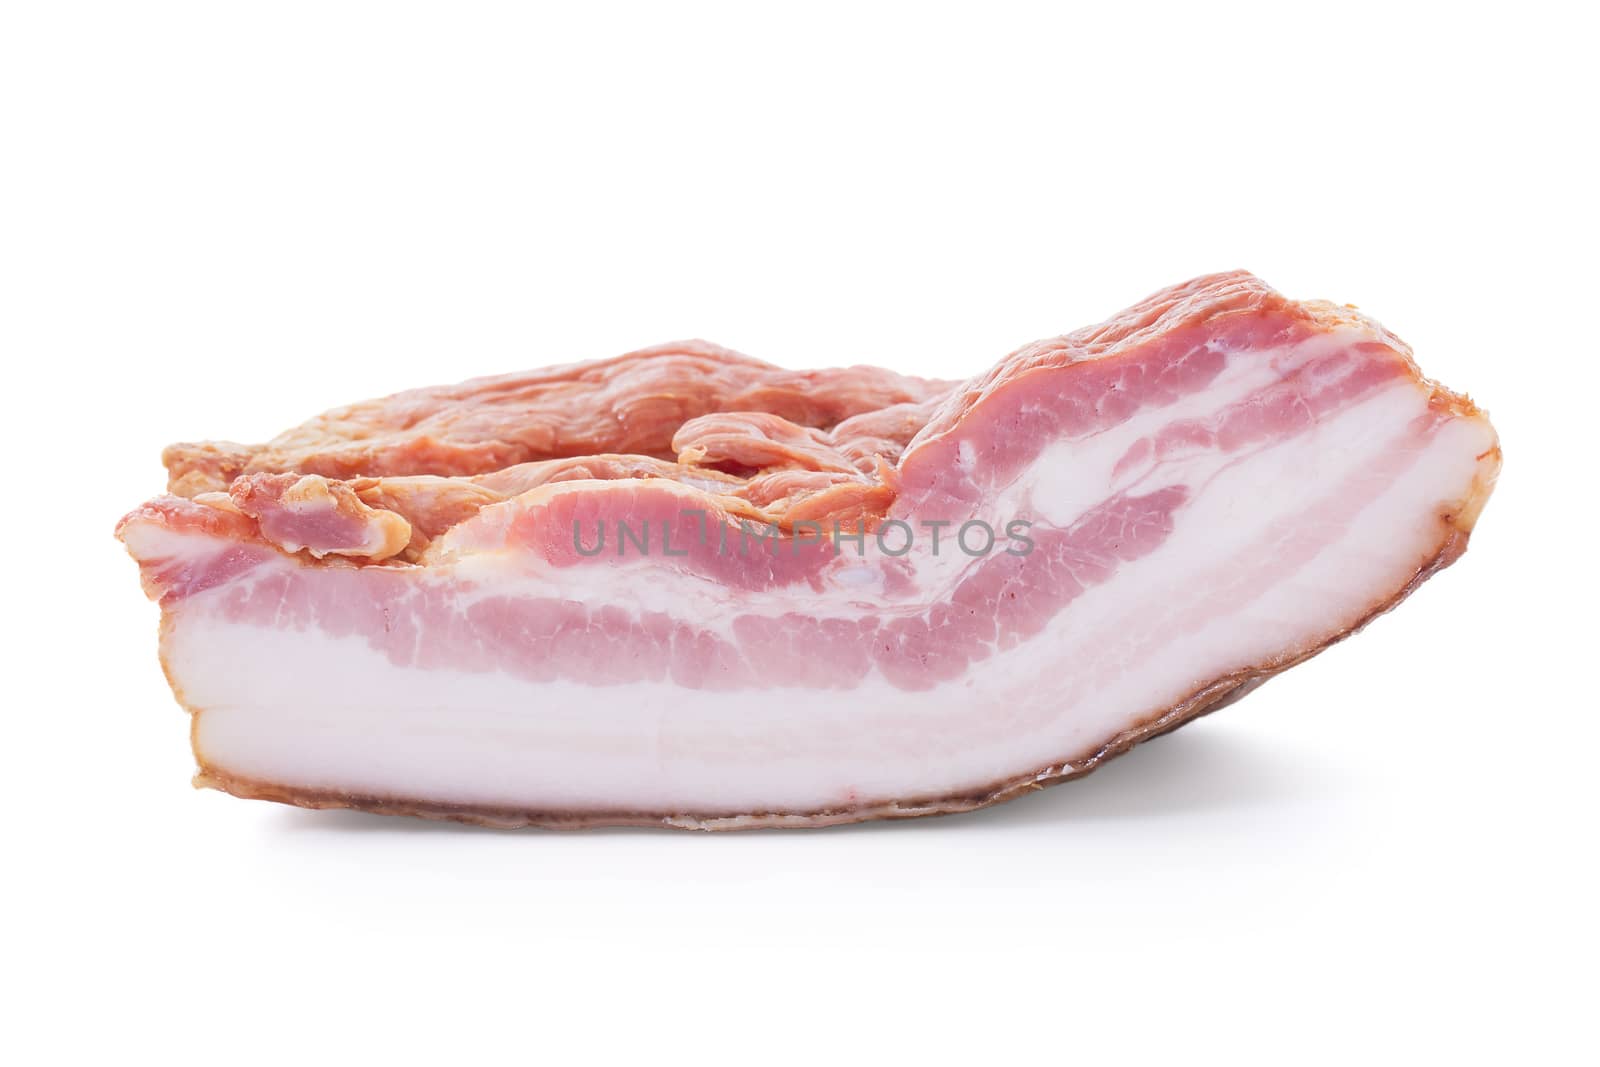 Smoked Bacon Slab Cut over white background, Shallow Focus, Horizontal shot